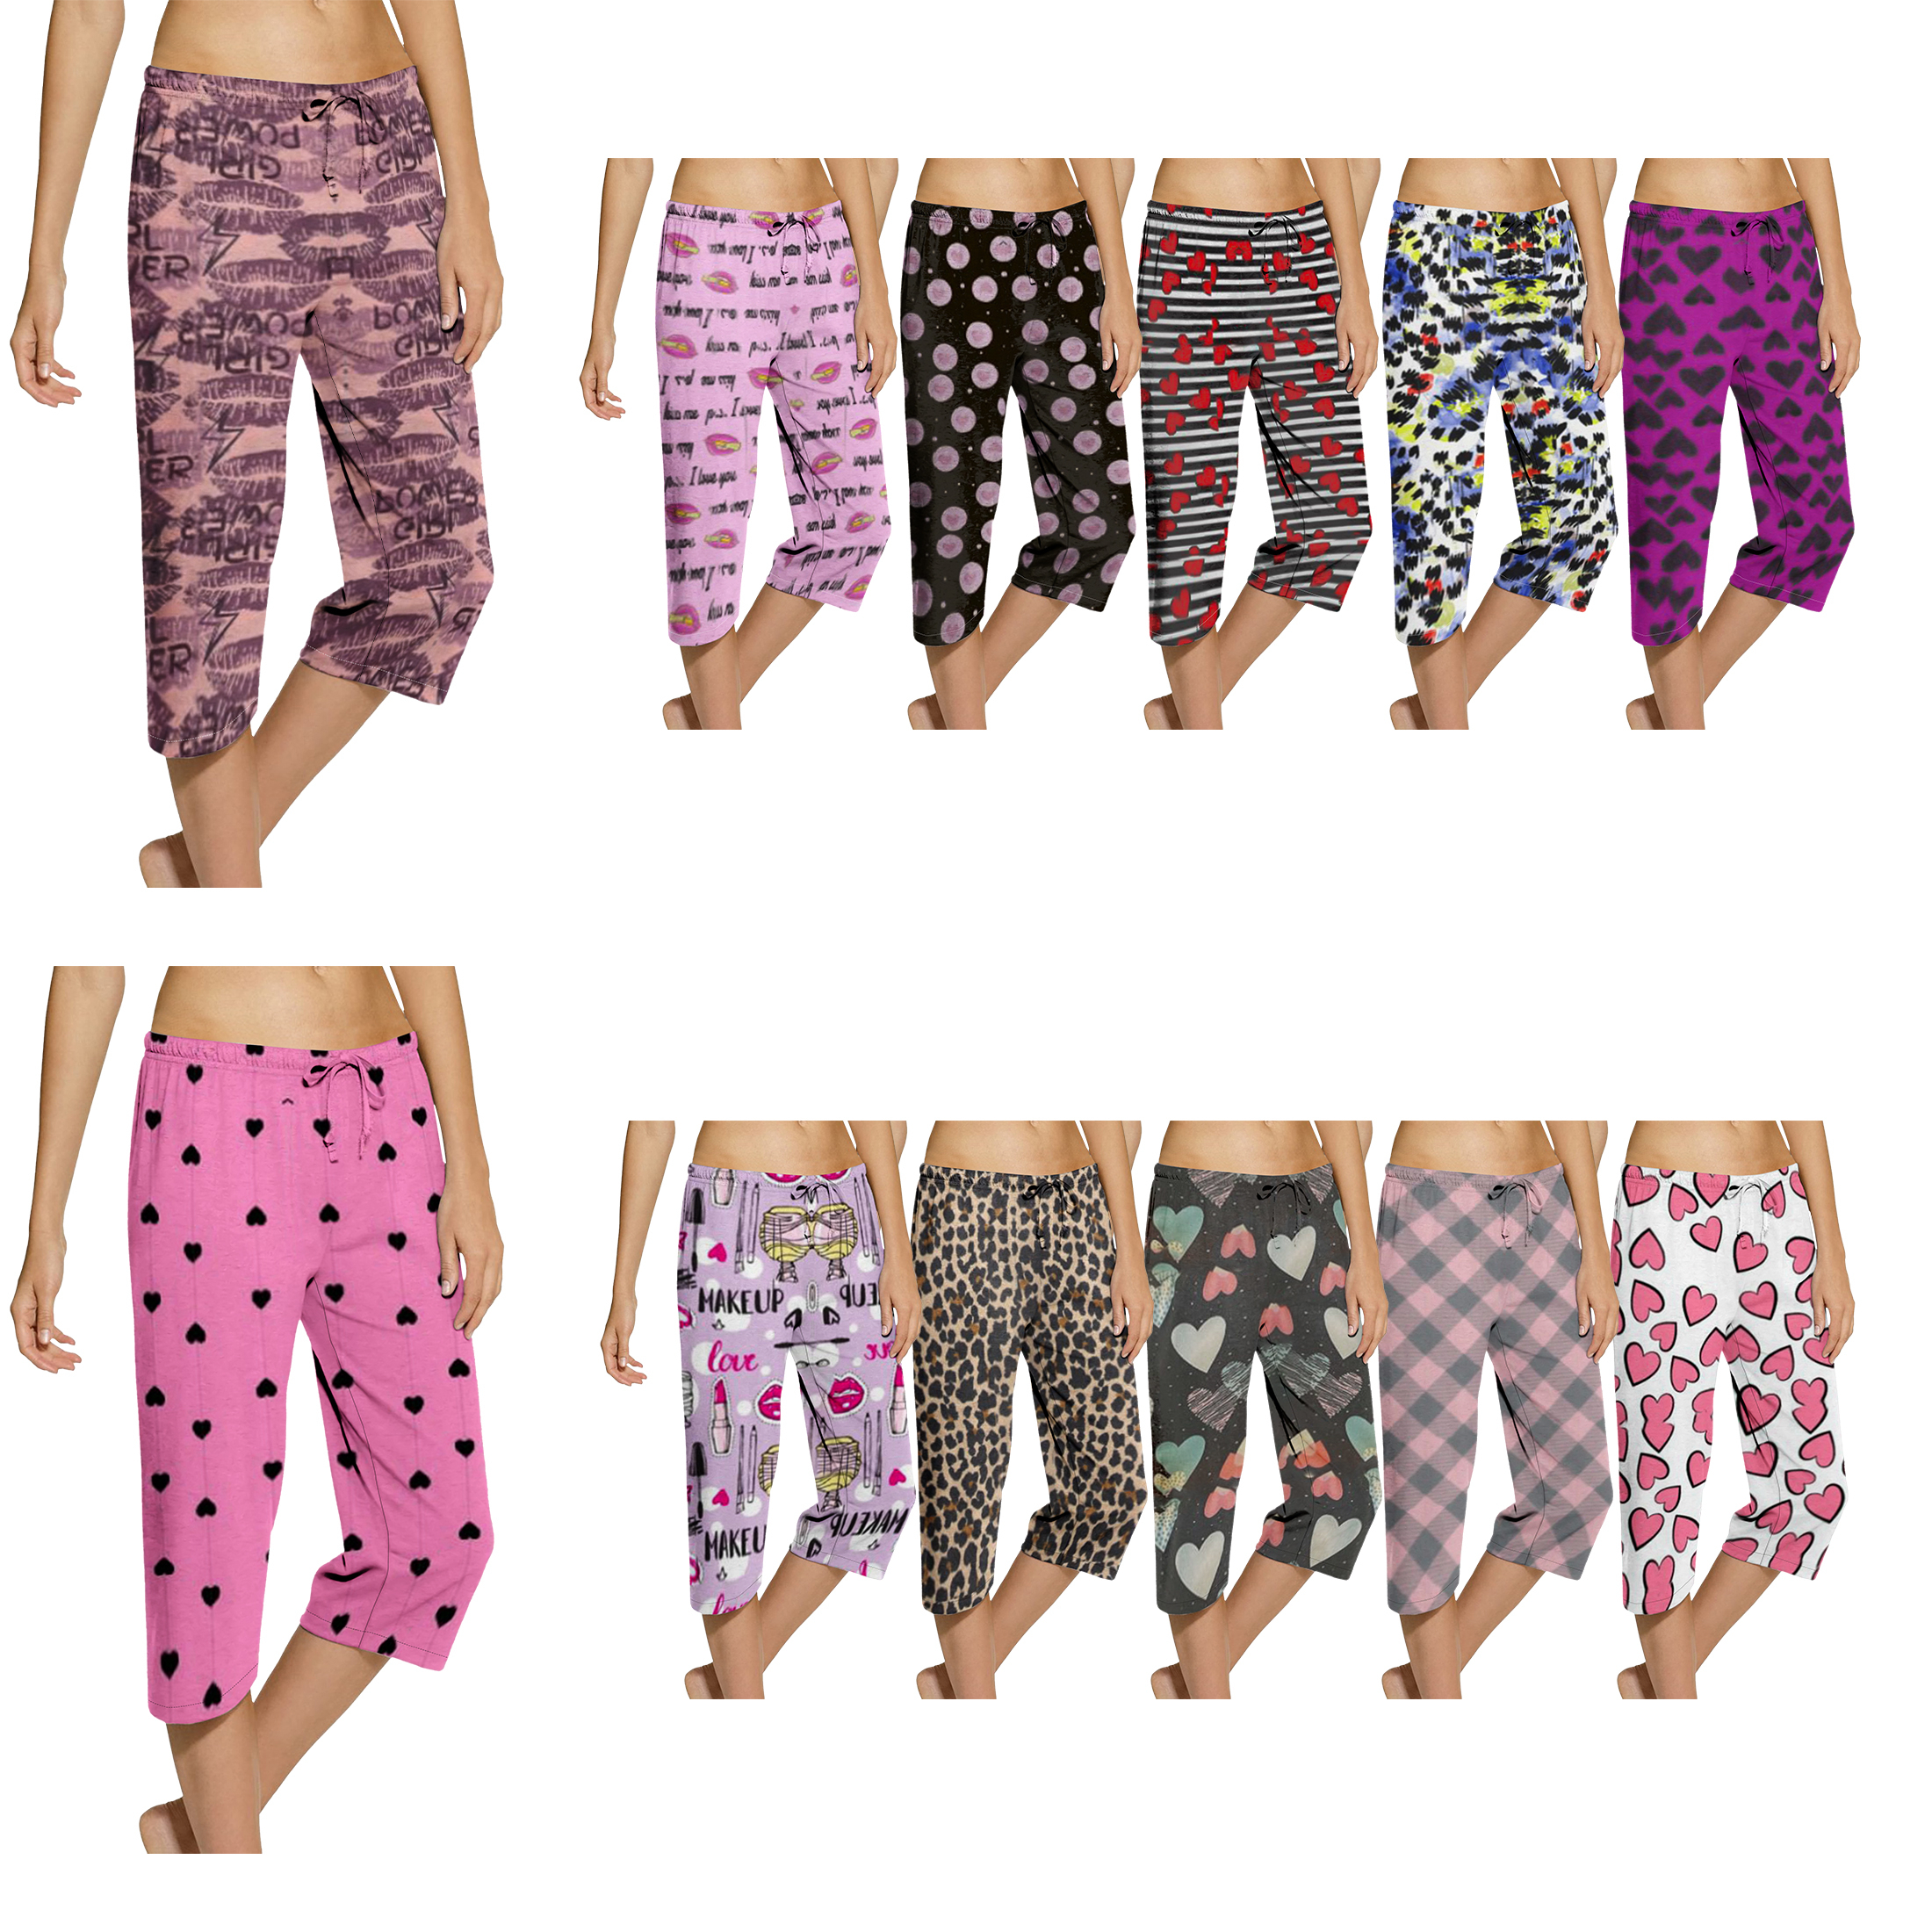 5-Pack Women's Capri Pajama Pants Soft Comfy Printed Summer Sleepwear Ladies PJ Bottom With Drawstring - M